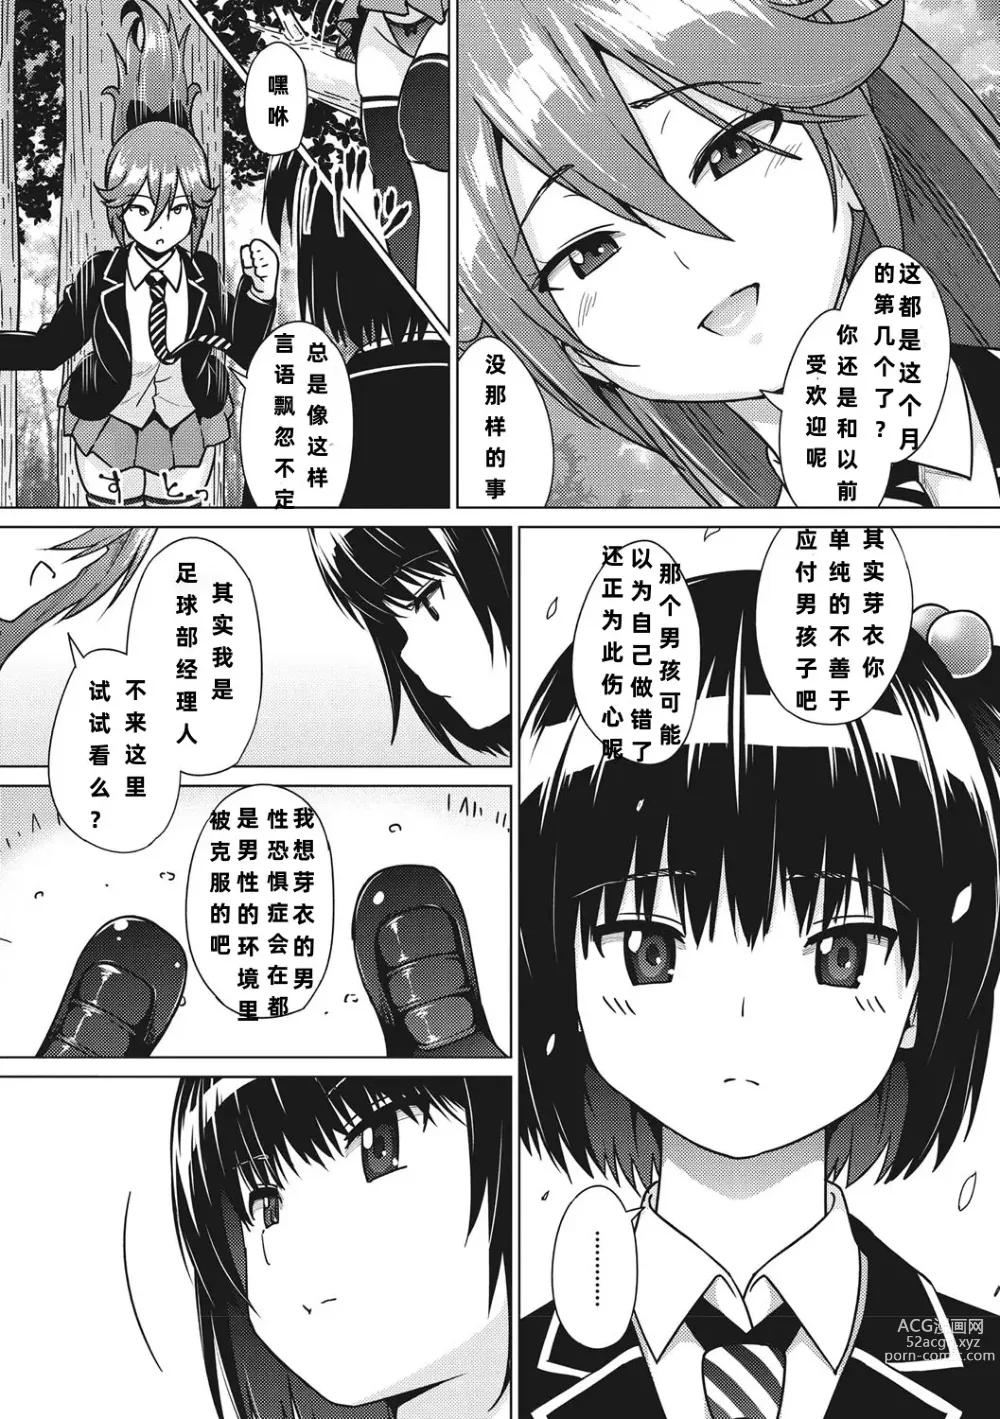 Page 4 of manga SocceMana Overcome